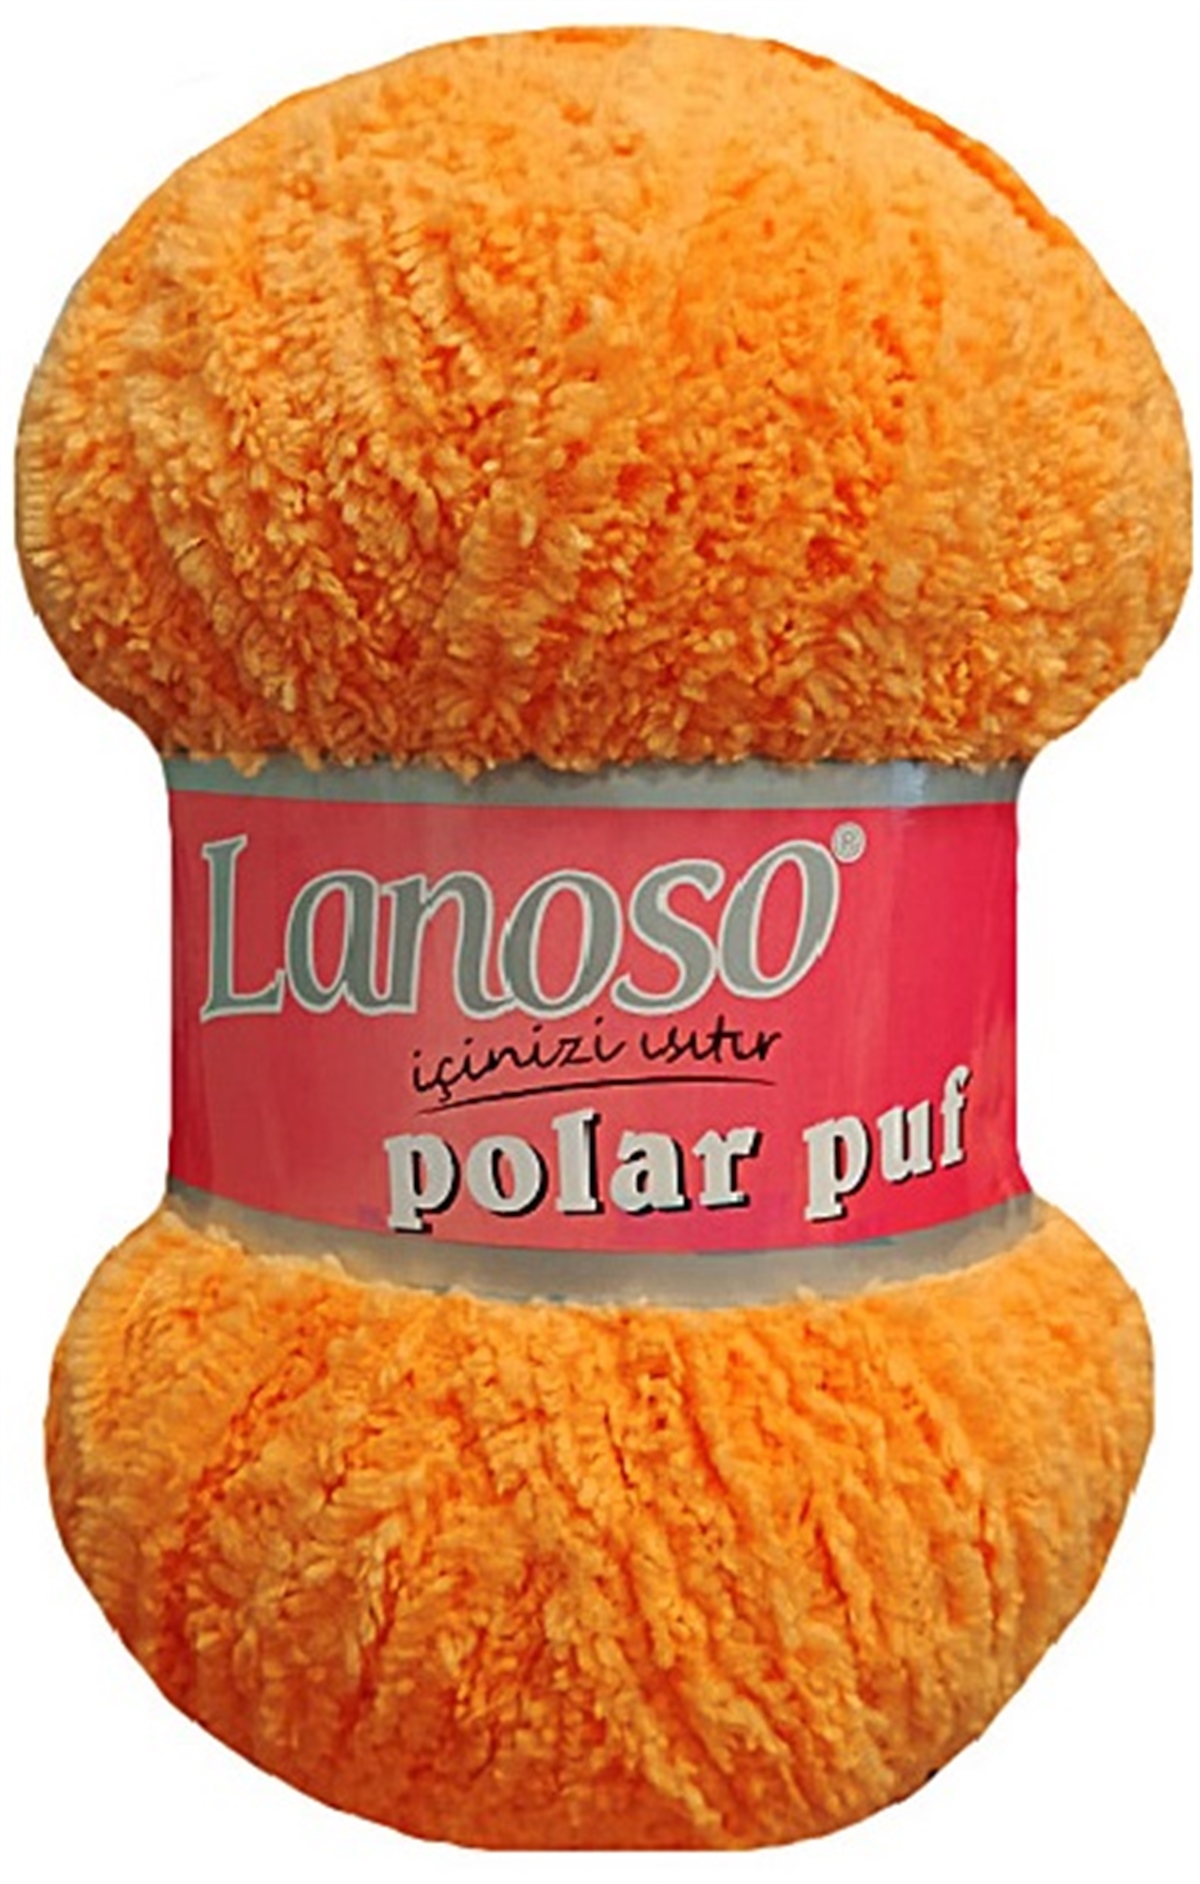 Polar Puf - 904 Turuncu/Orange | Lanoso İplik